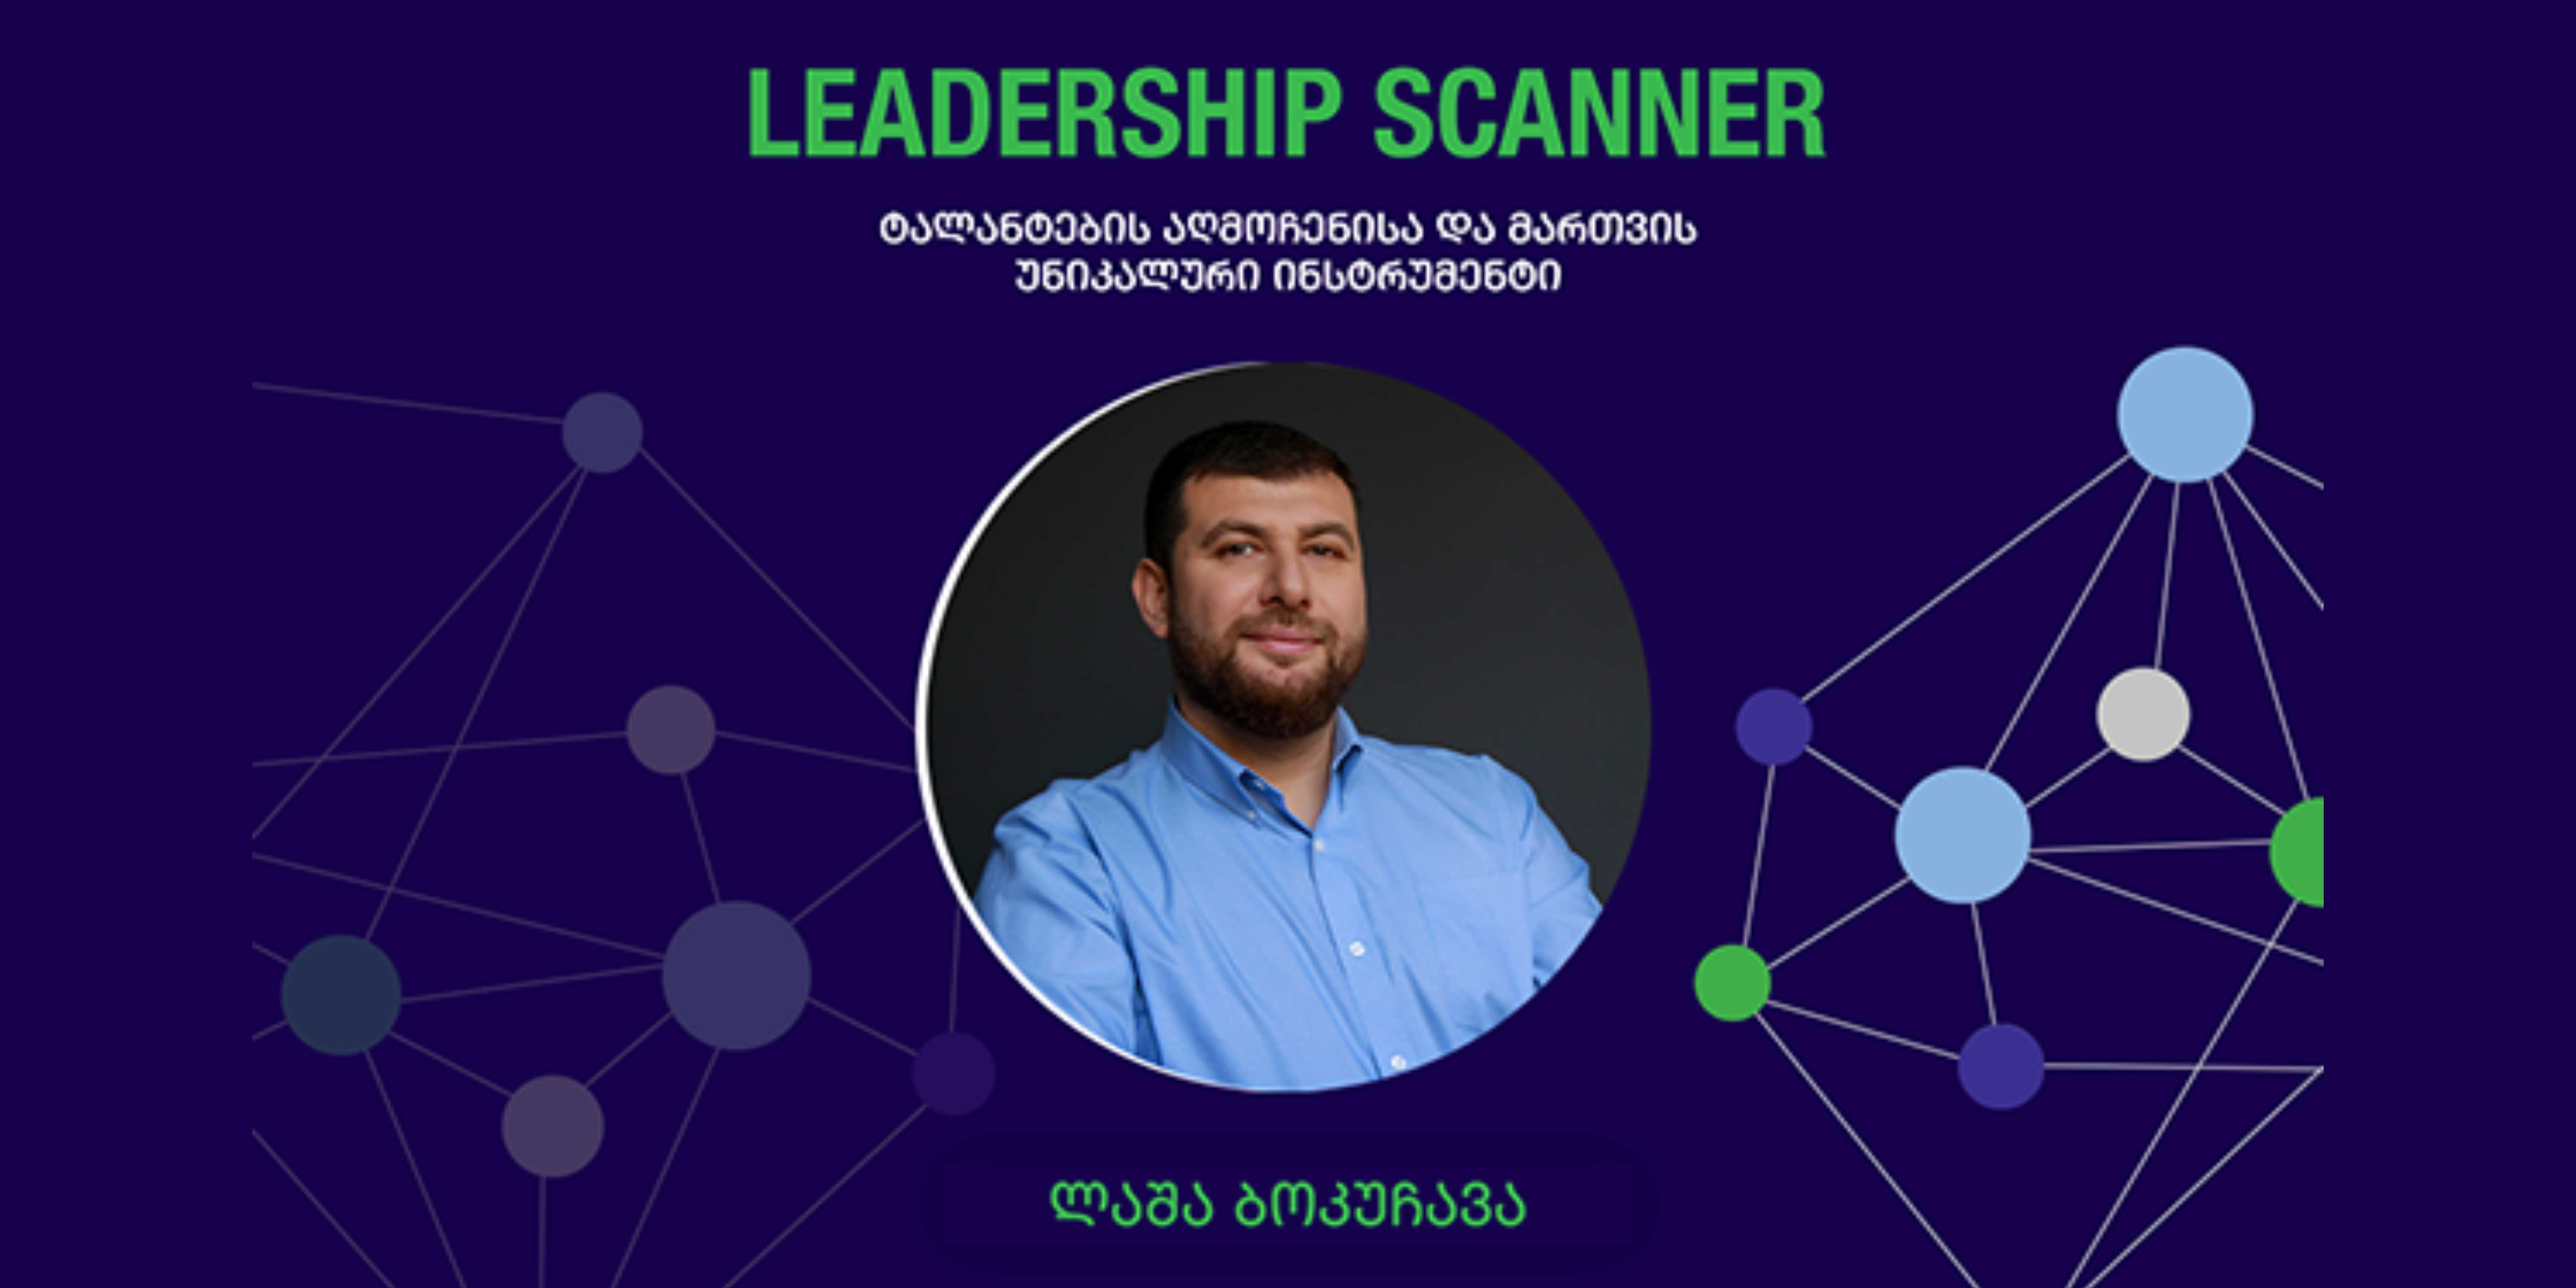 Webinar "LEADERSHIP SCANNER Unique Talent Detection and Management Tool"